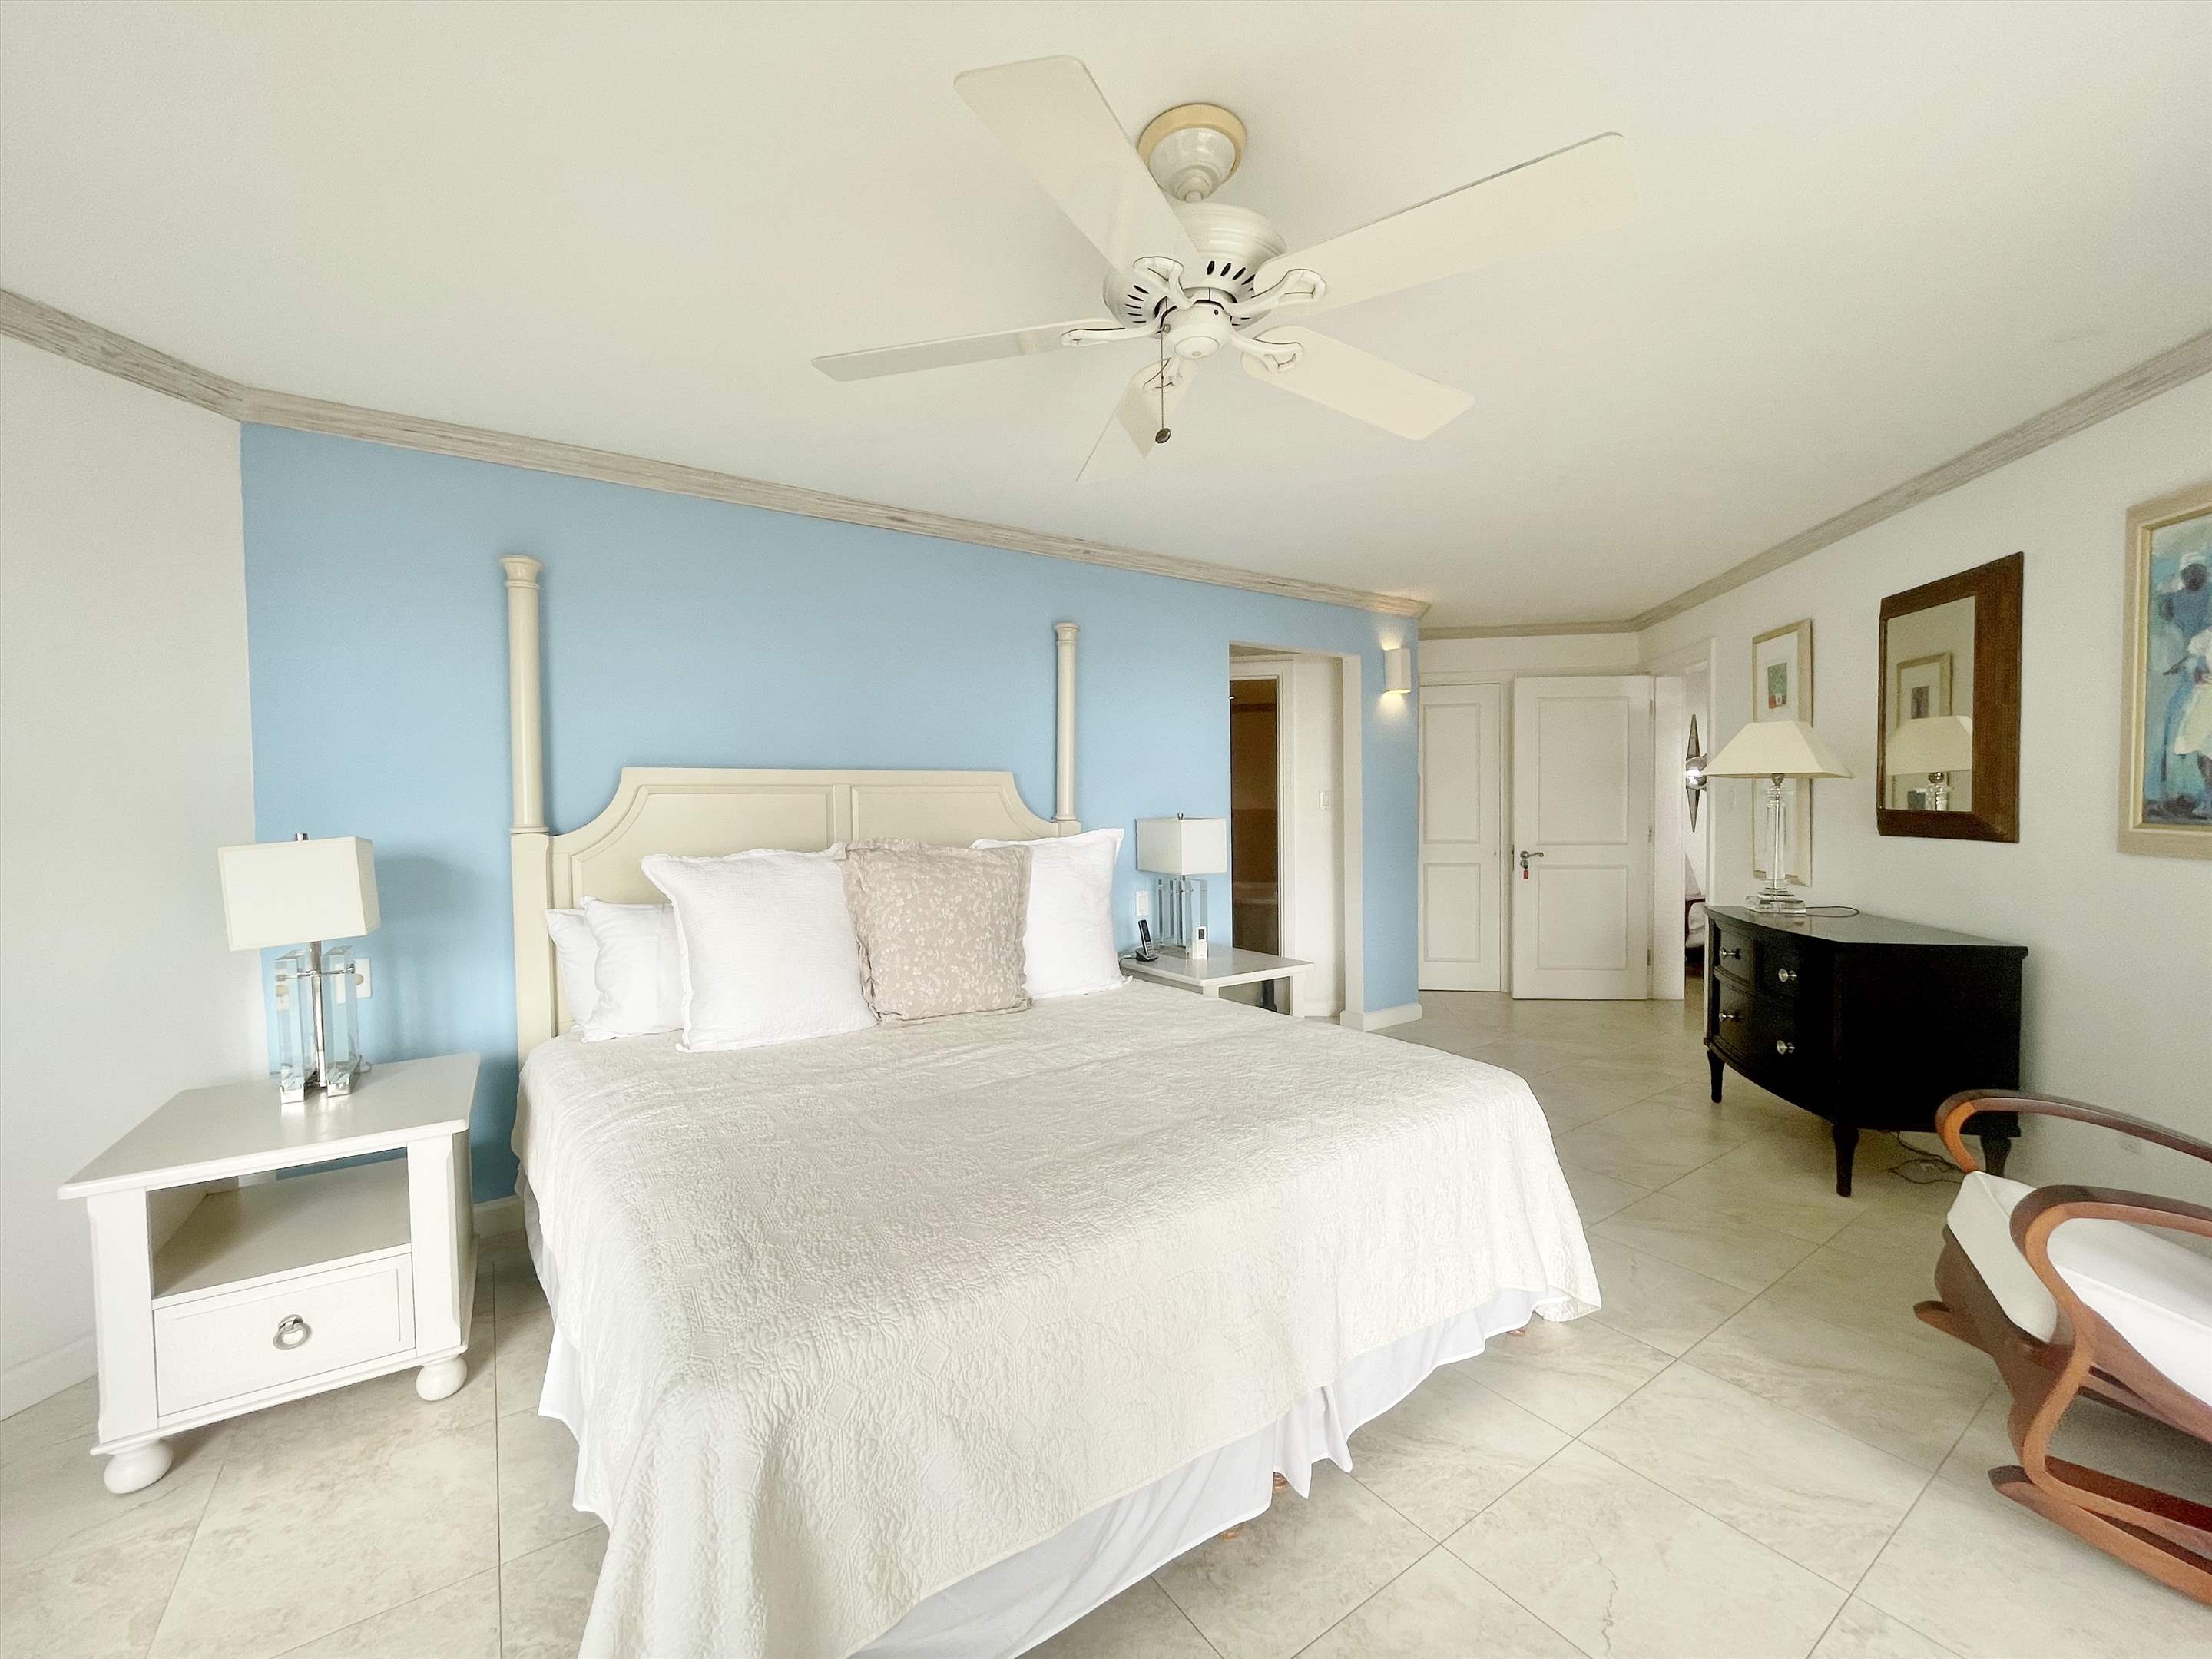 Villas on the Beach 103, 2 bedroom, 2 bedroom apartment in St. James & West Coast, Barbados Photo #11